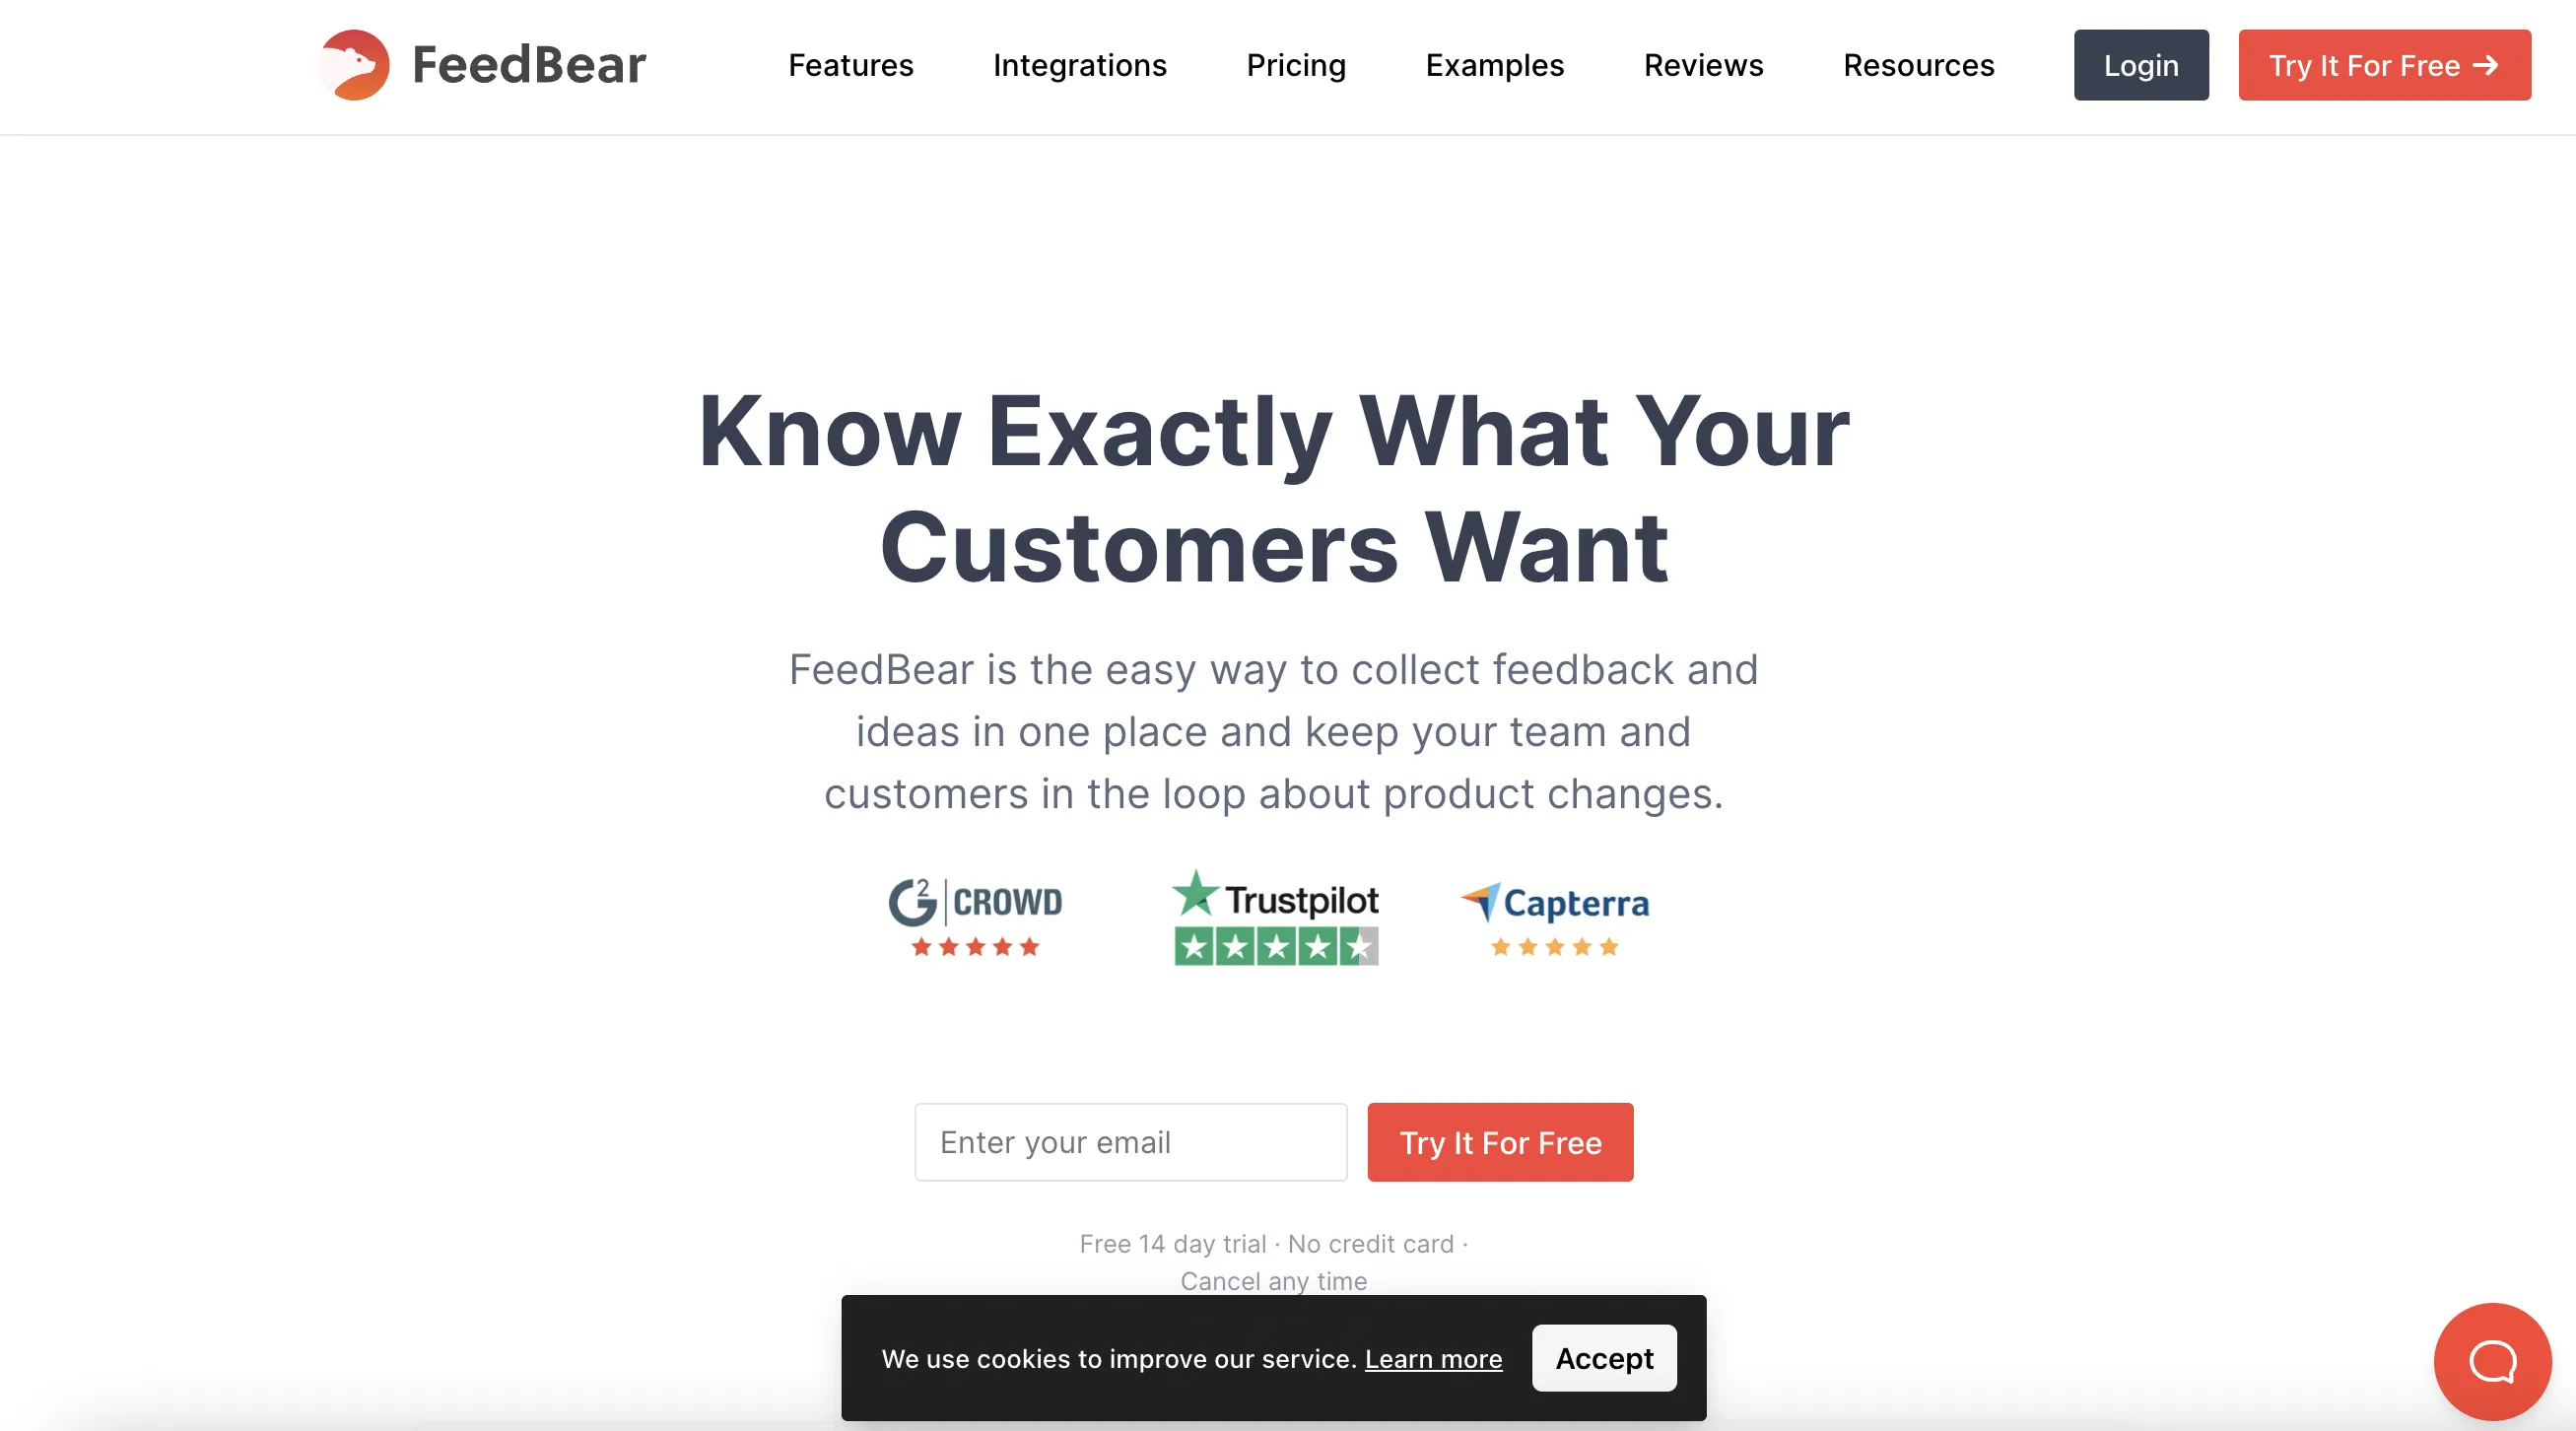 Feedbear home page screenshot feature voting tool